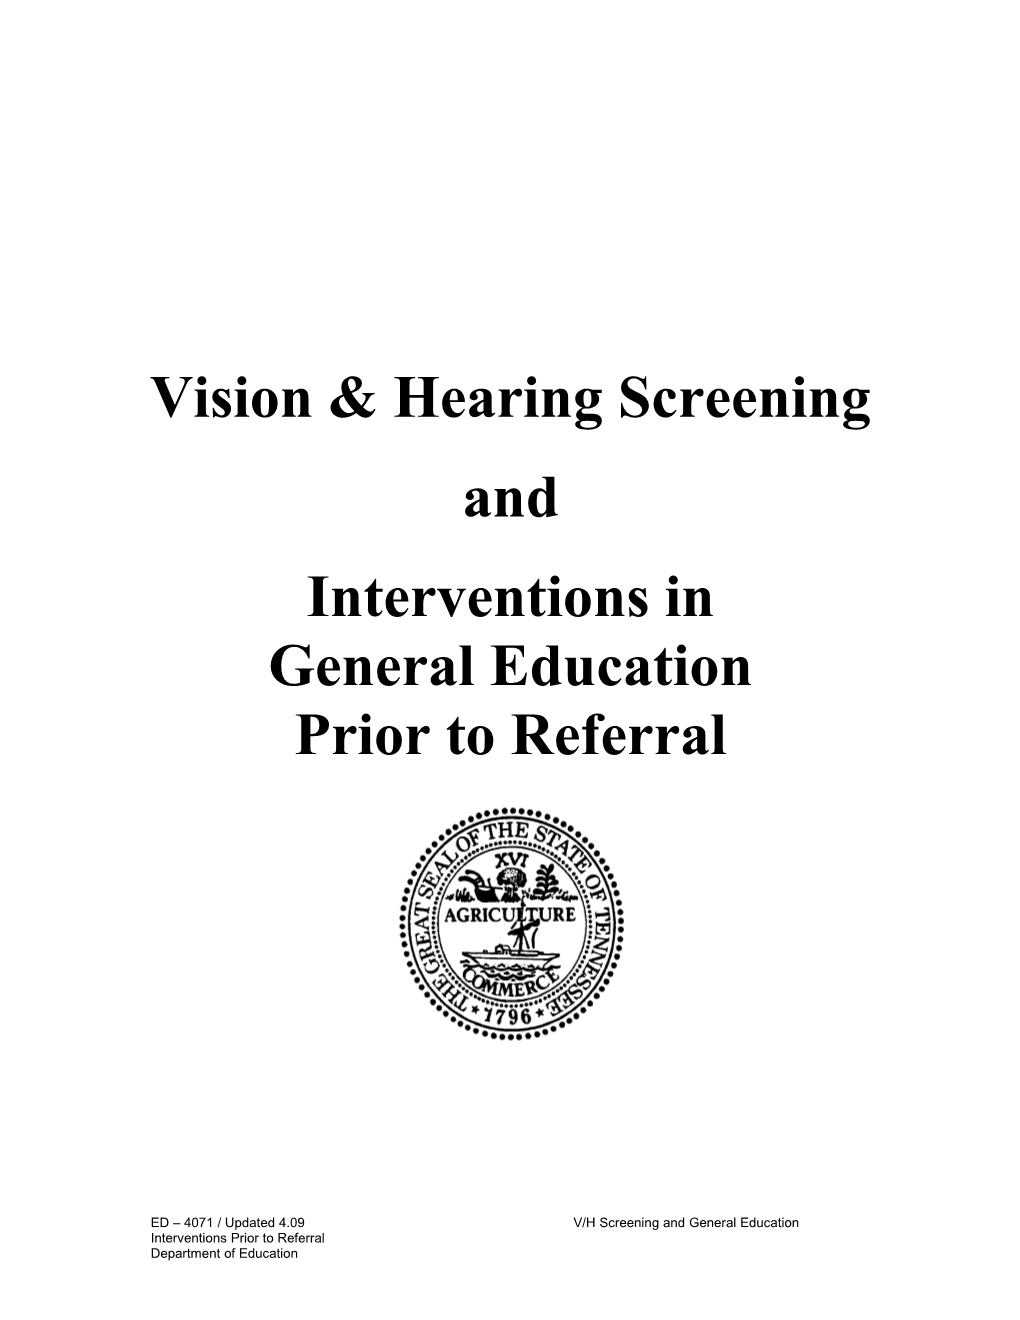 General Education Vision Screening Guidelines